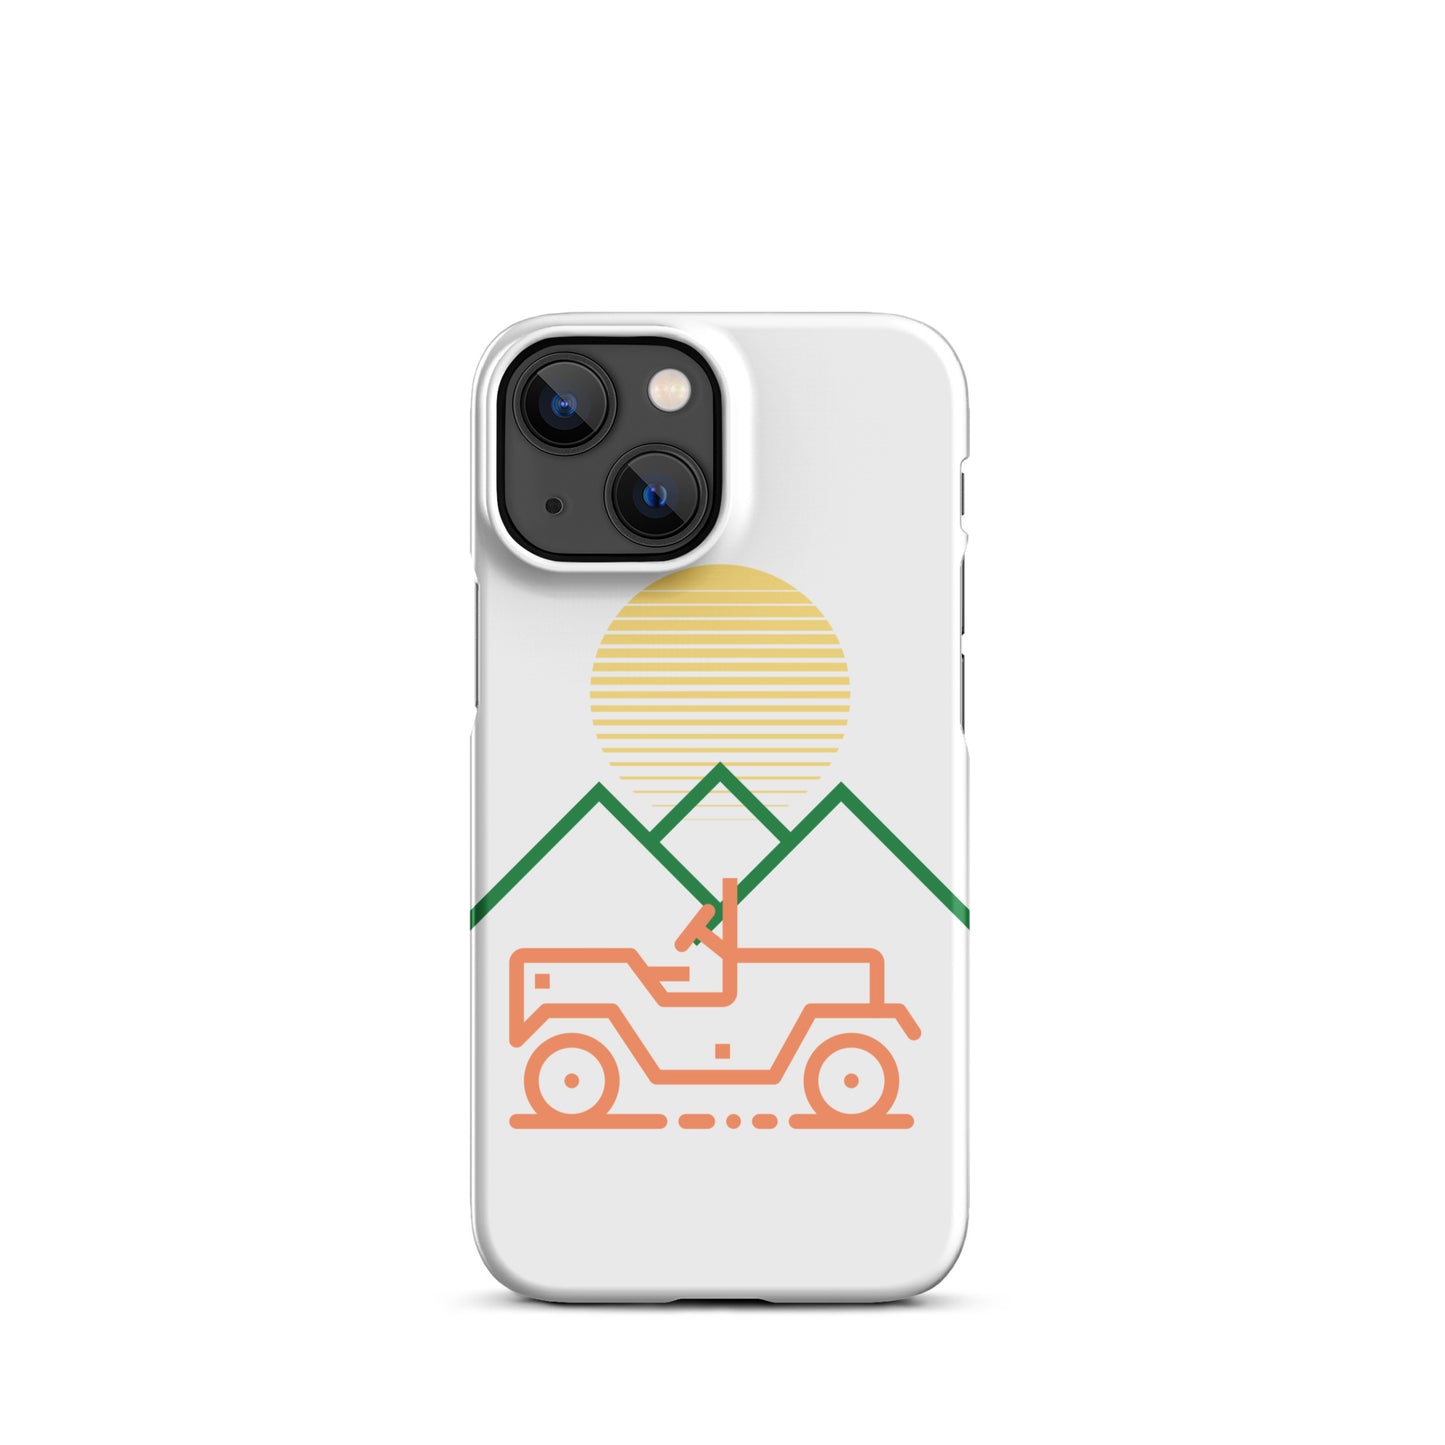 Snap case for iPhone® Sun Mountain 4x4